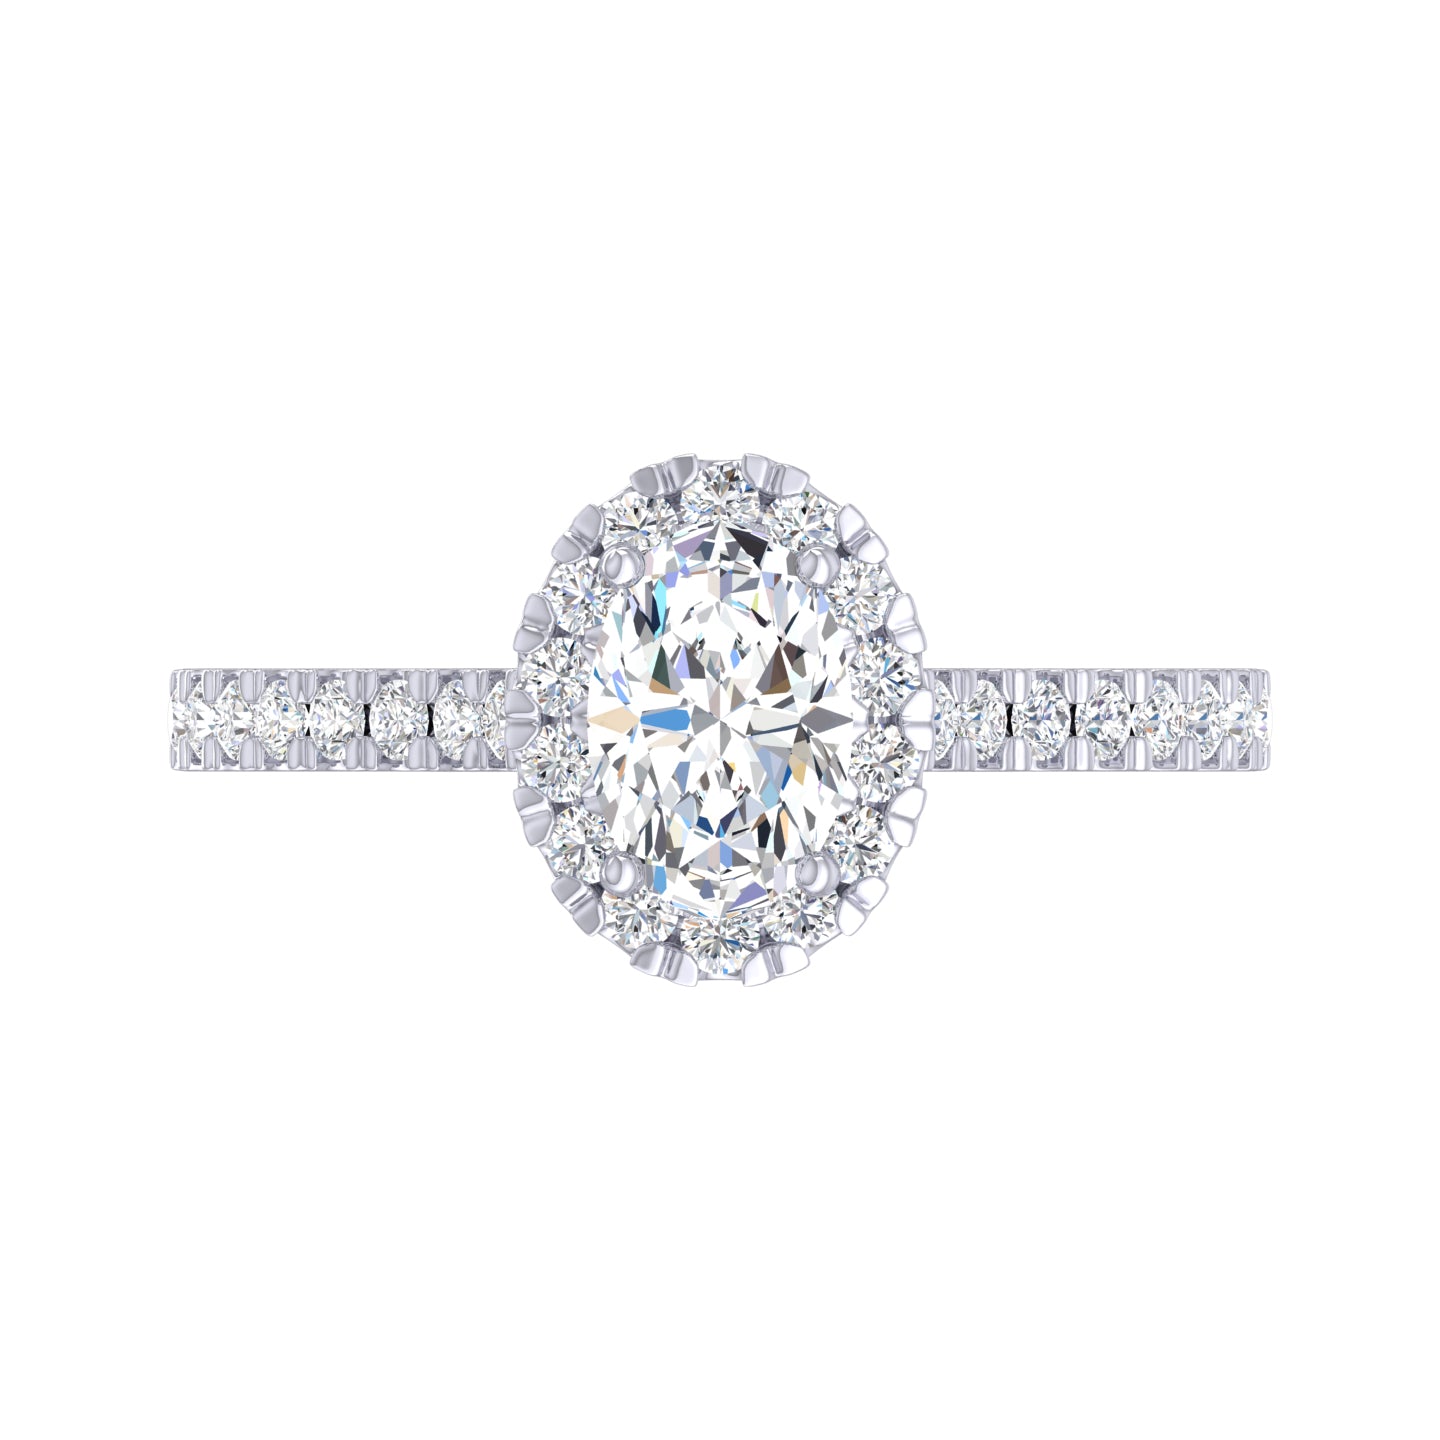 Semi Mount Oval Cut Diamond Engagement Ring